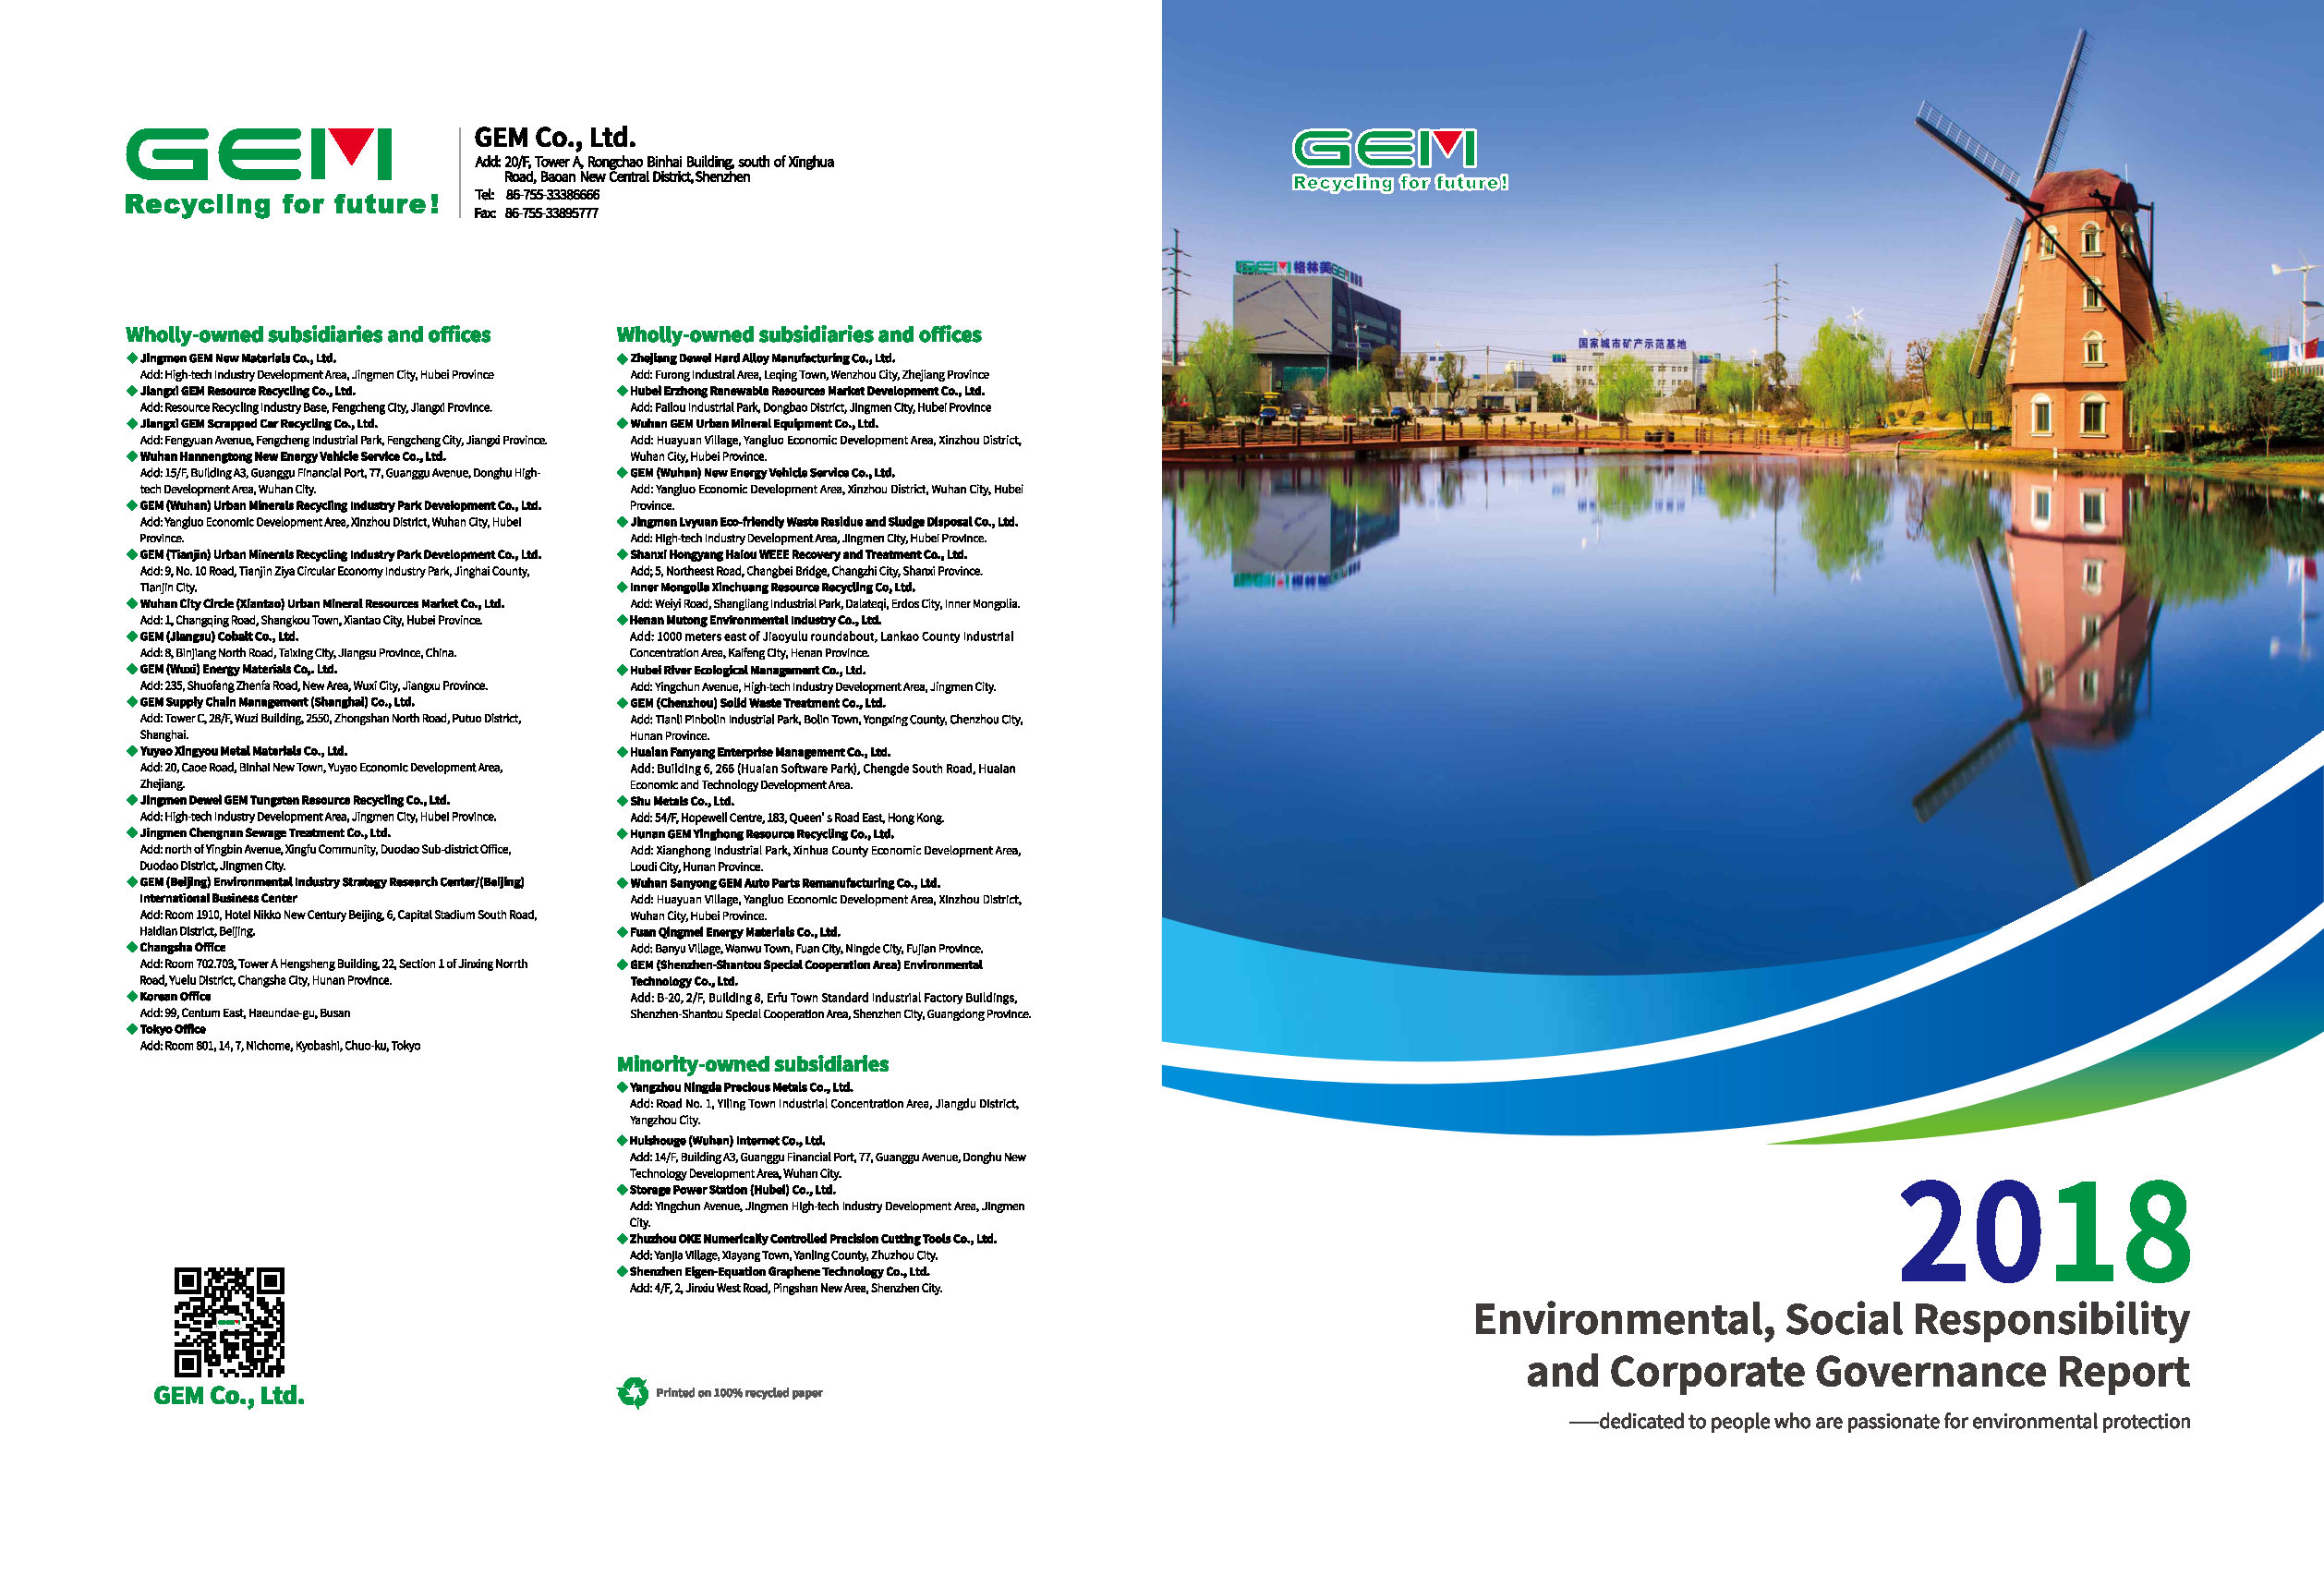 GEM Environment, Social Responsibility and Corporate Governance Report 2018.jpg